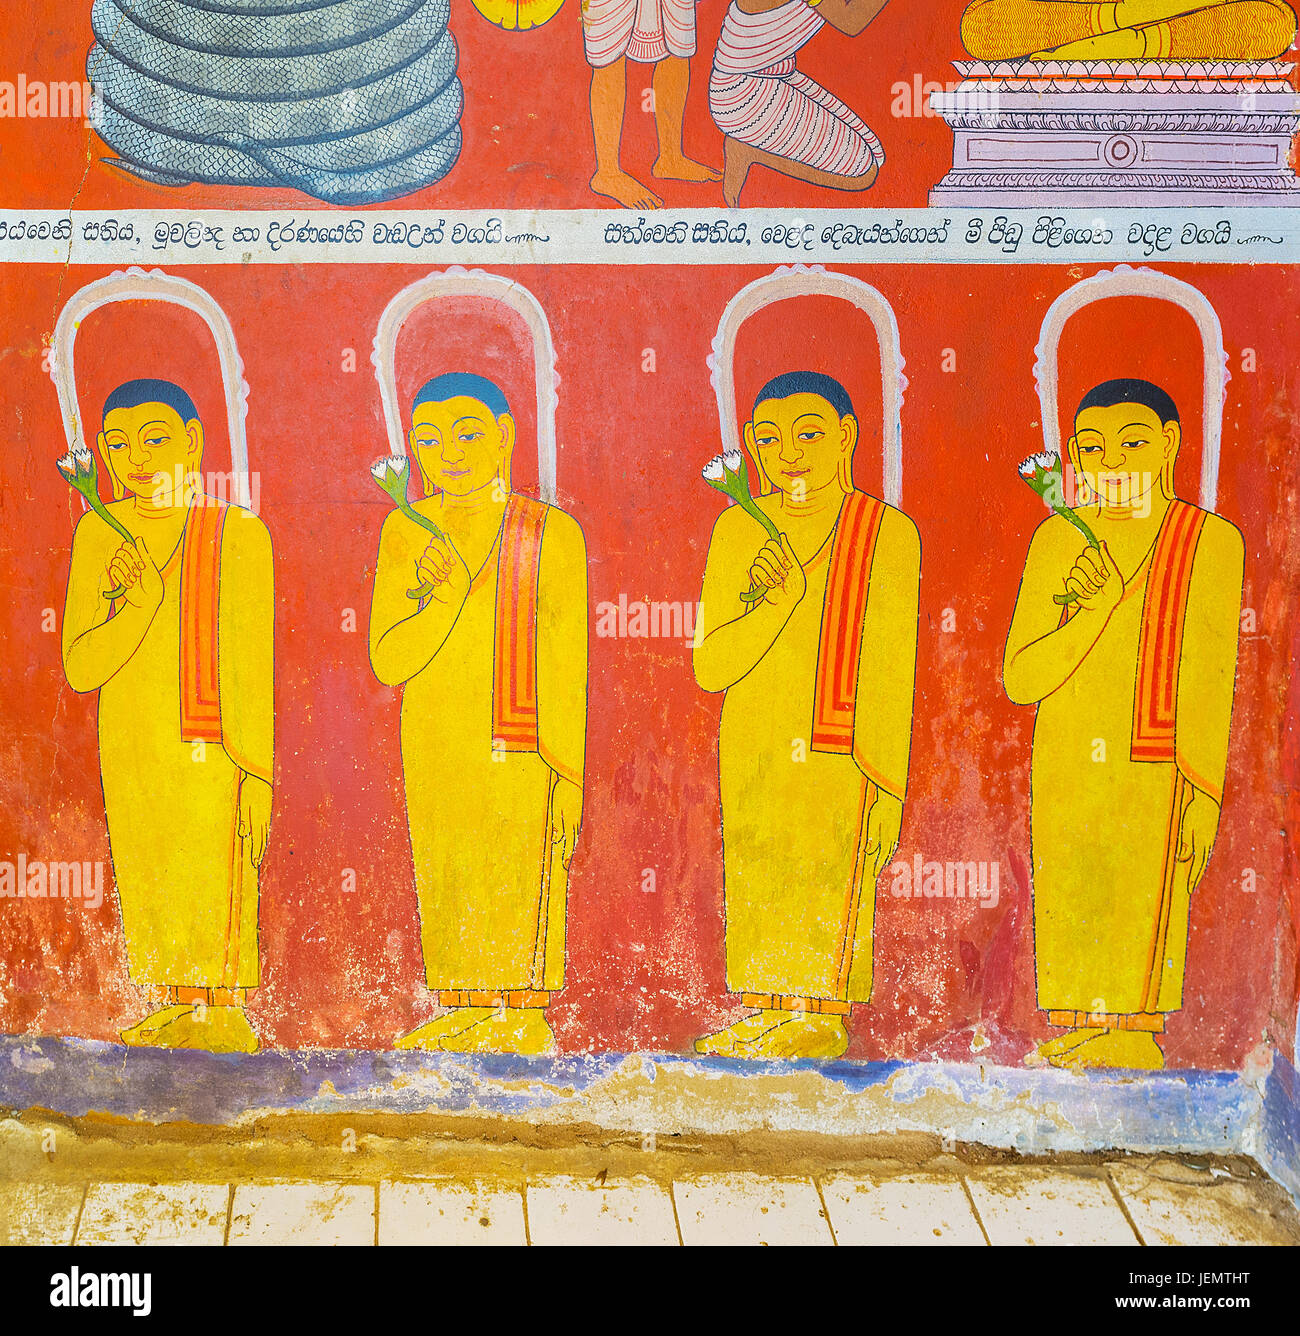 UDUNUWARA, SRI LANKA - le 29 novembre 2016 : la peinture du mur à Sanctum dans Dewalaya Garagha Embekka de Temple illustre les moines bhikkhu avec fleurs, o Banque D'Images